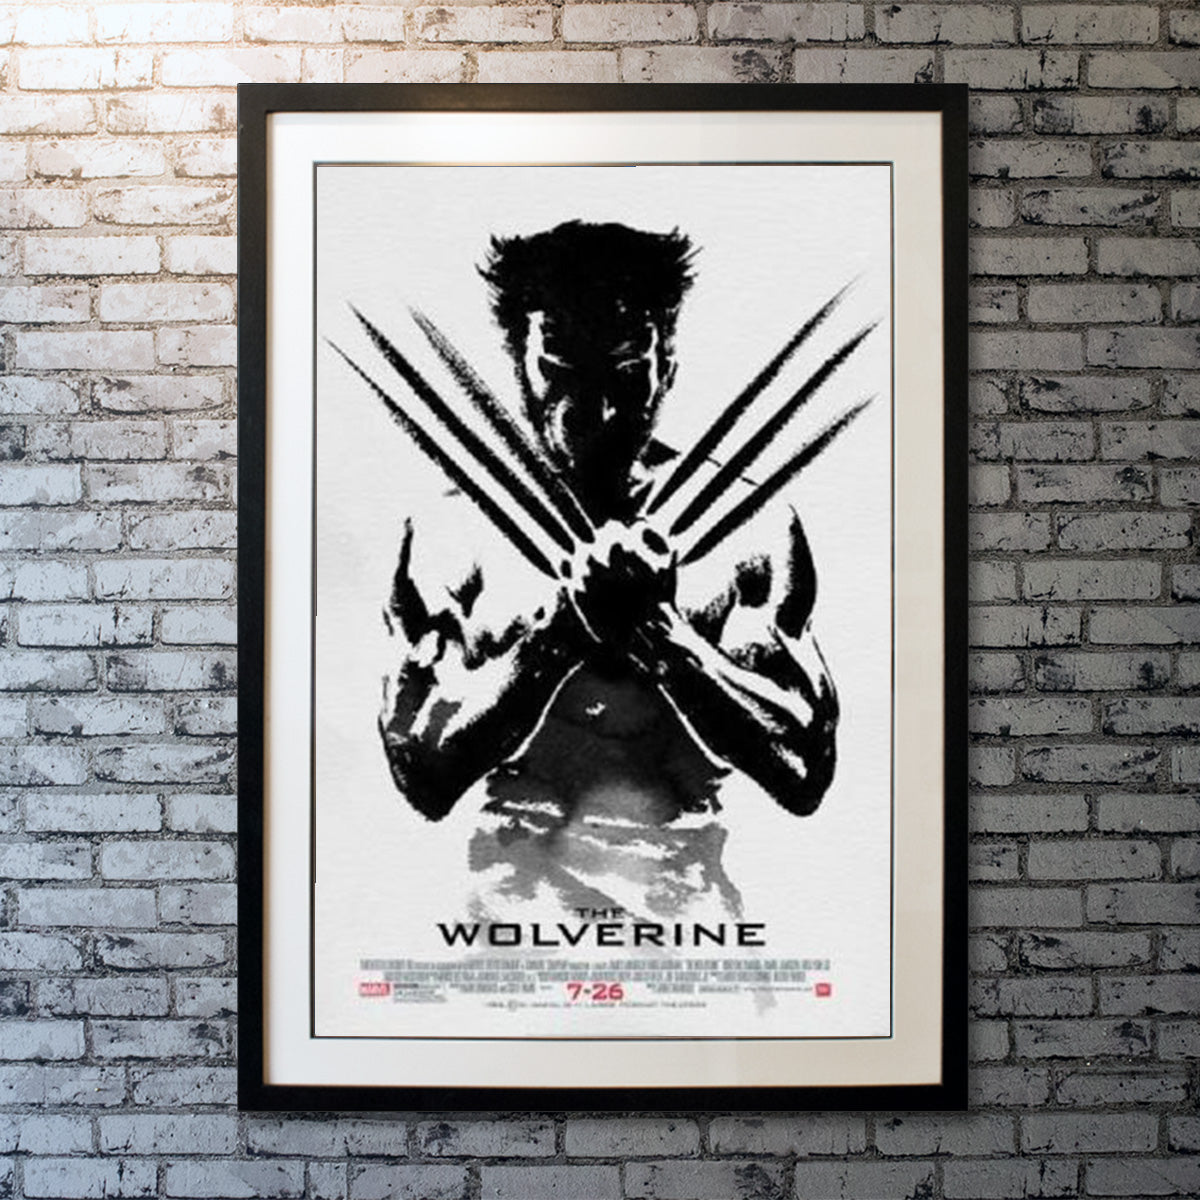 Original Movie Poster of The Wolverine (2013)